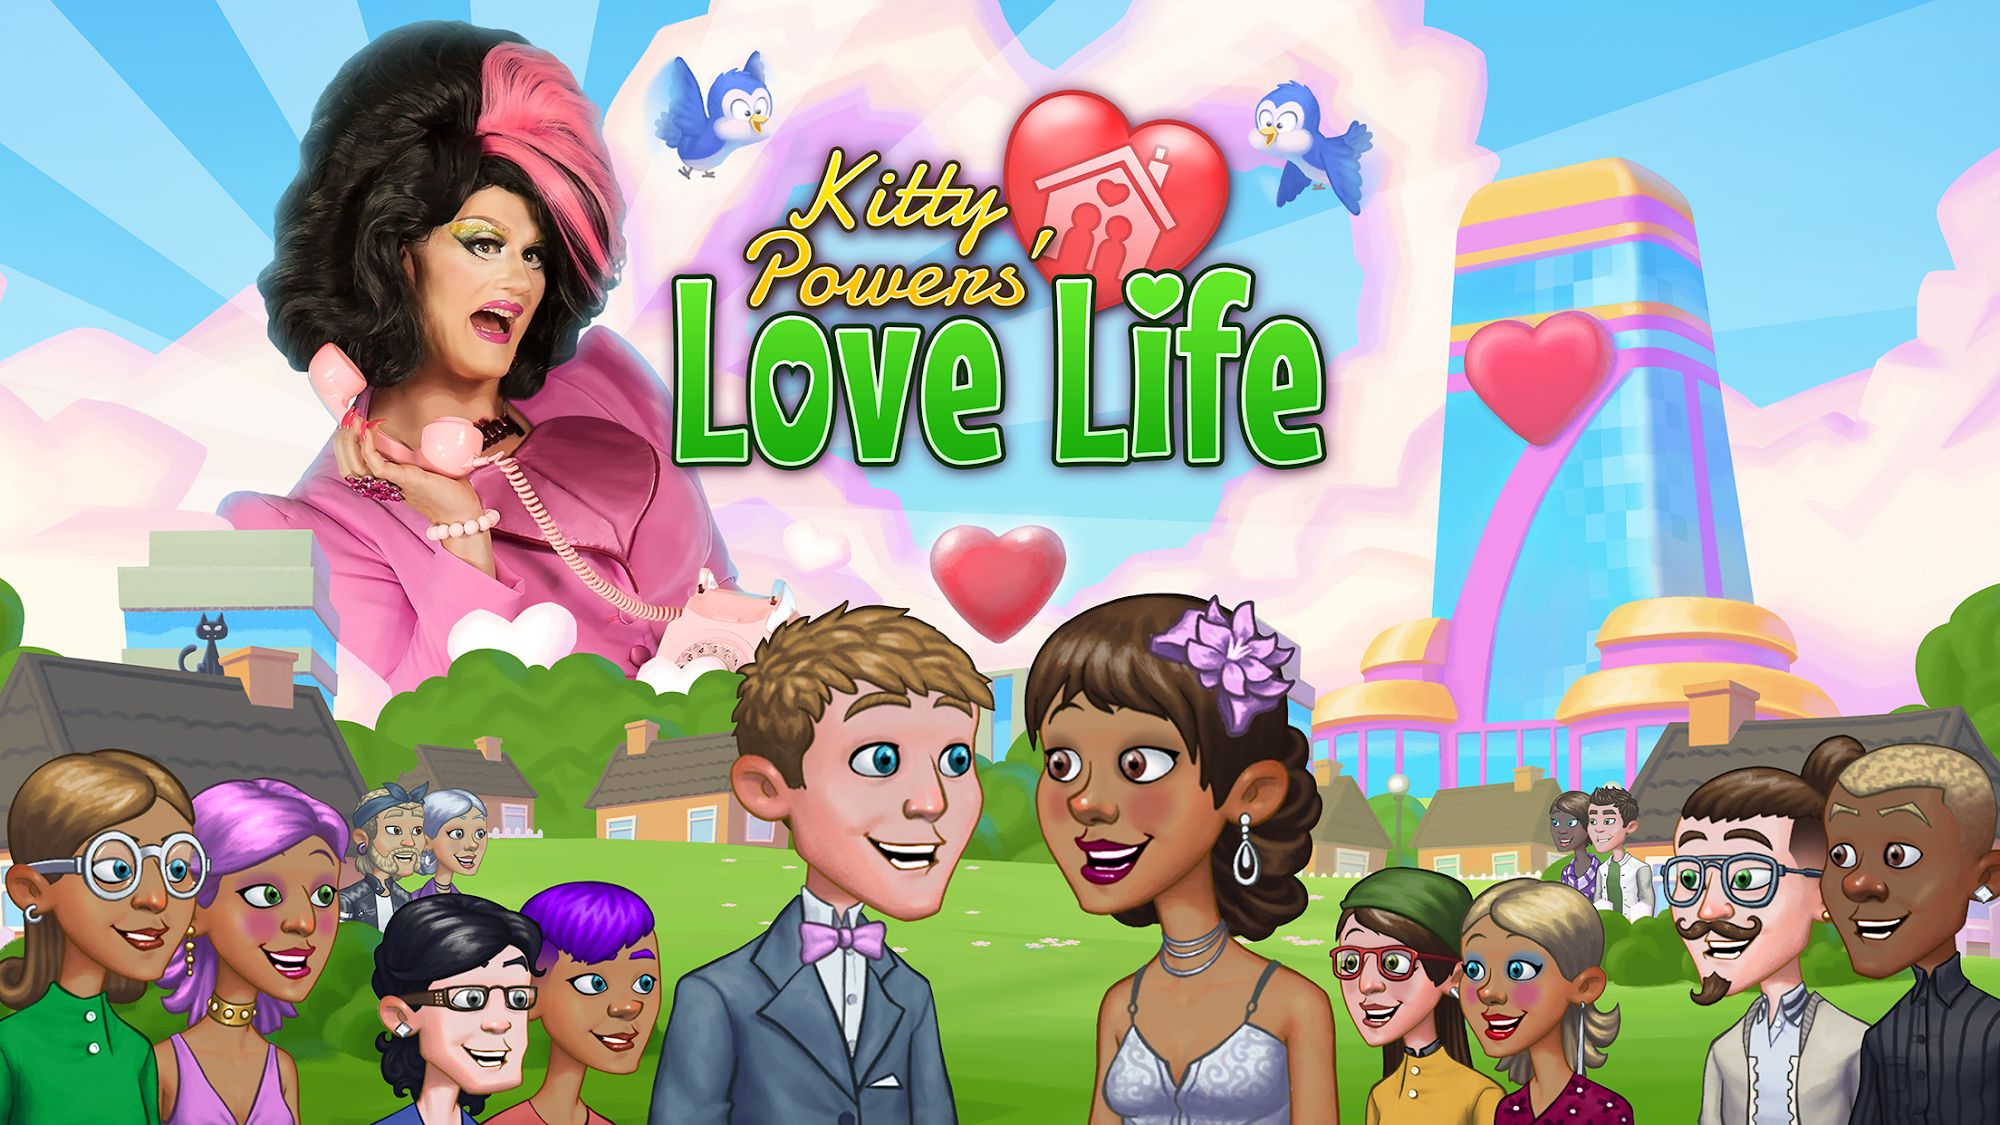 Descargar Kitty Powers' Love Life gratis para Android.